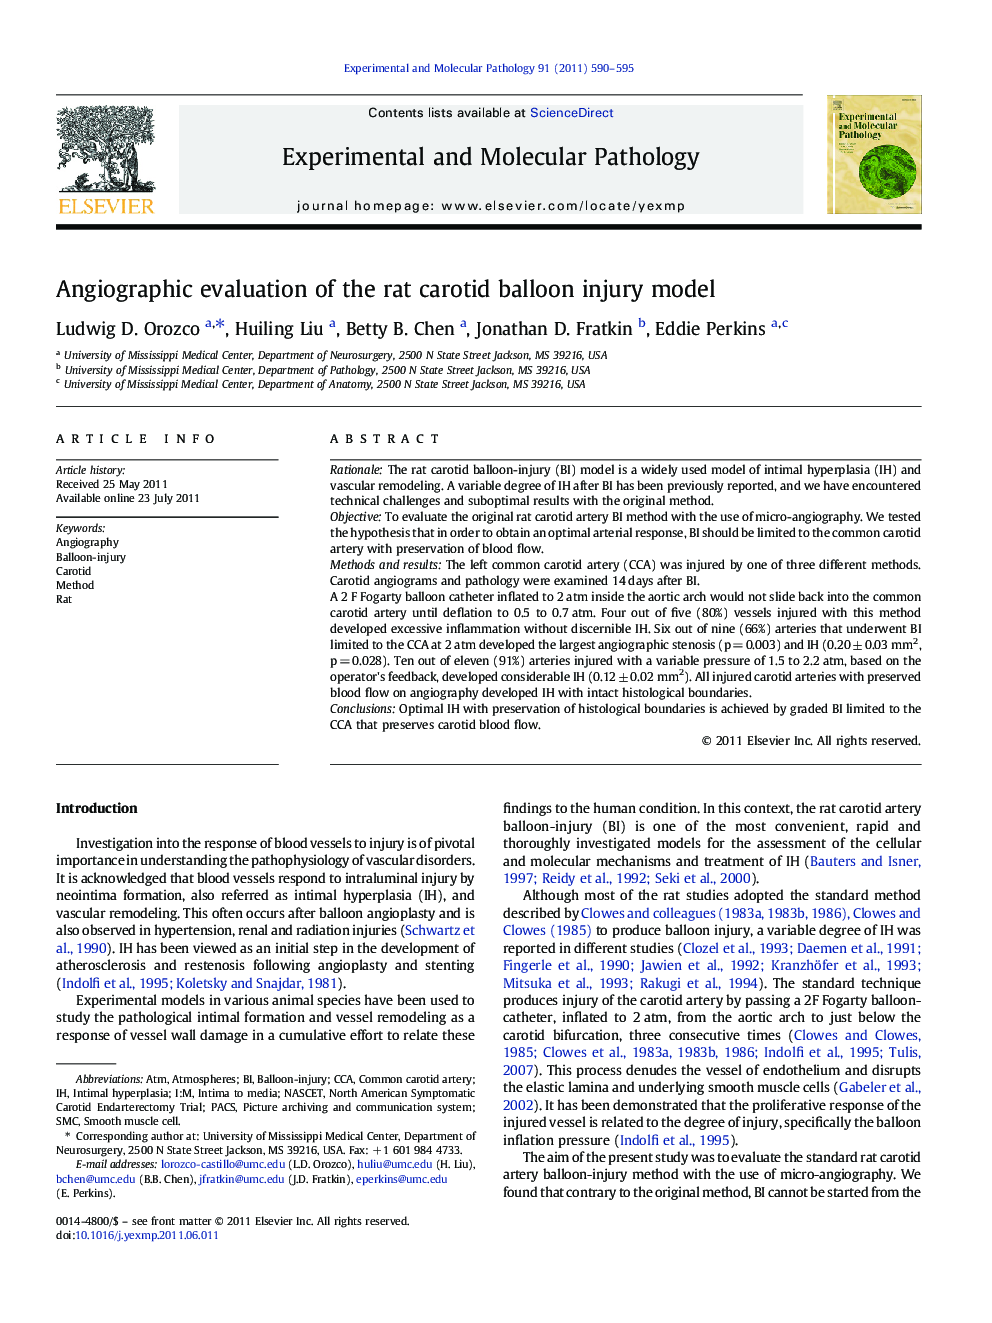 Angiographic evaluation of the rat carotid balloon injury model